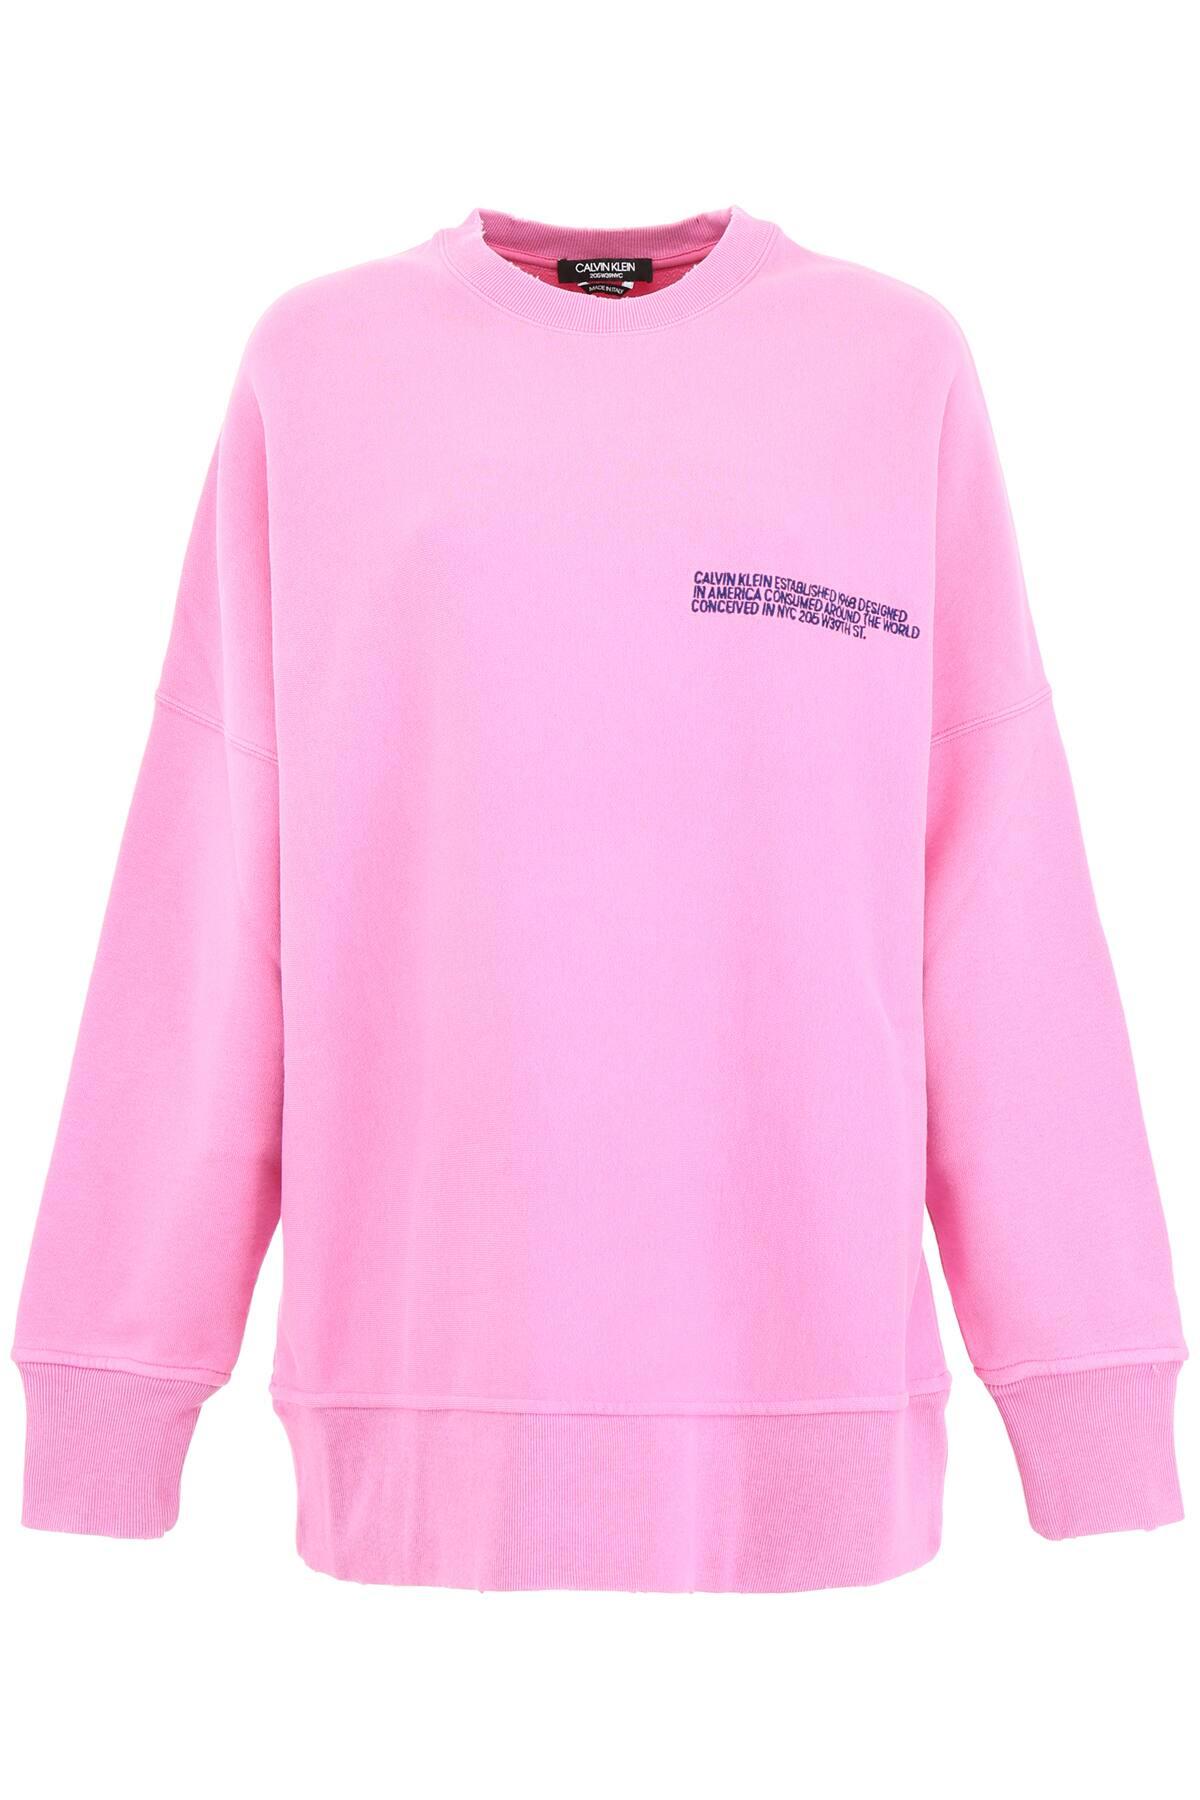 CALVIN KLEIN 205W39NYC Cotton Oversized Sweatshirt With Logo in Pink ...